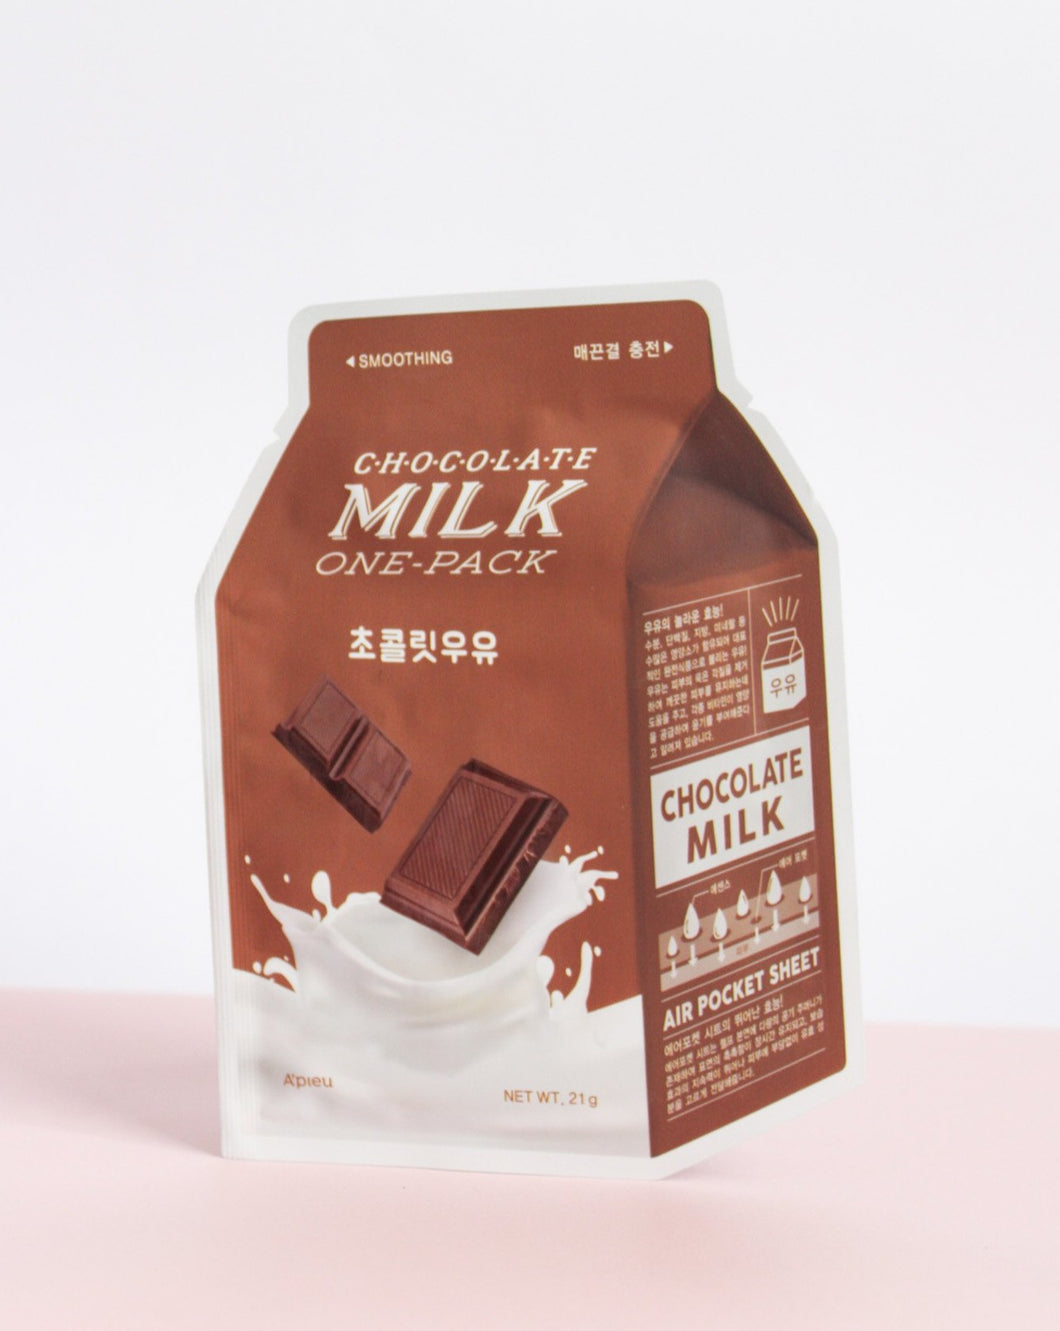 Milk One pack - Chocolate Milk